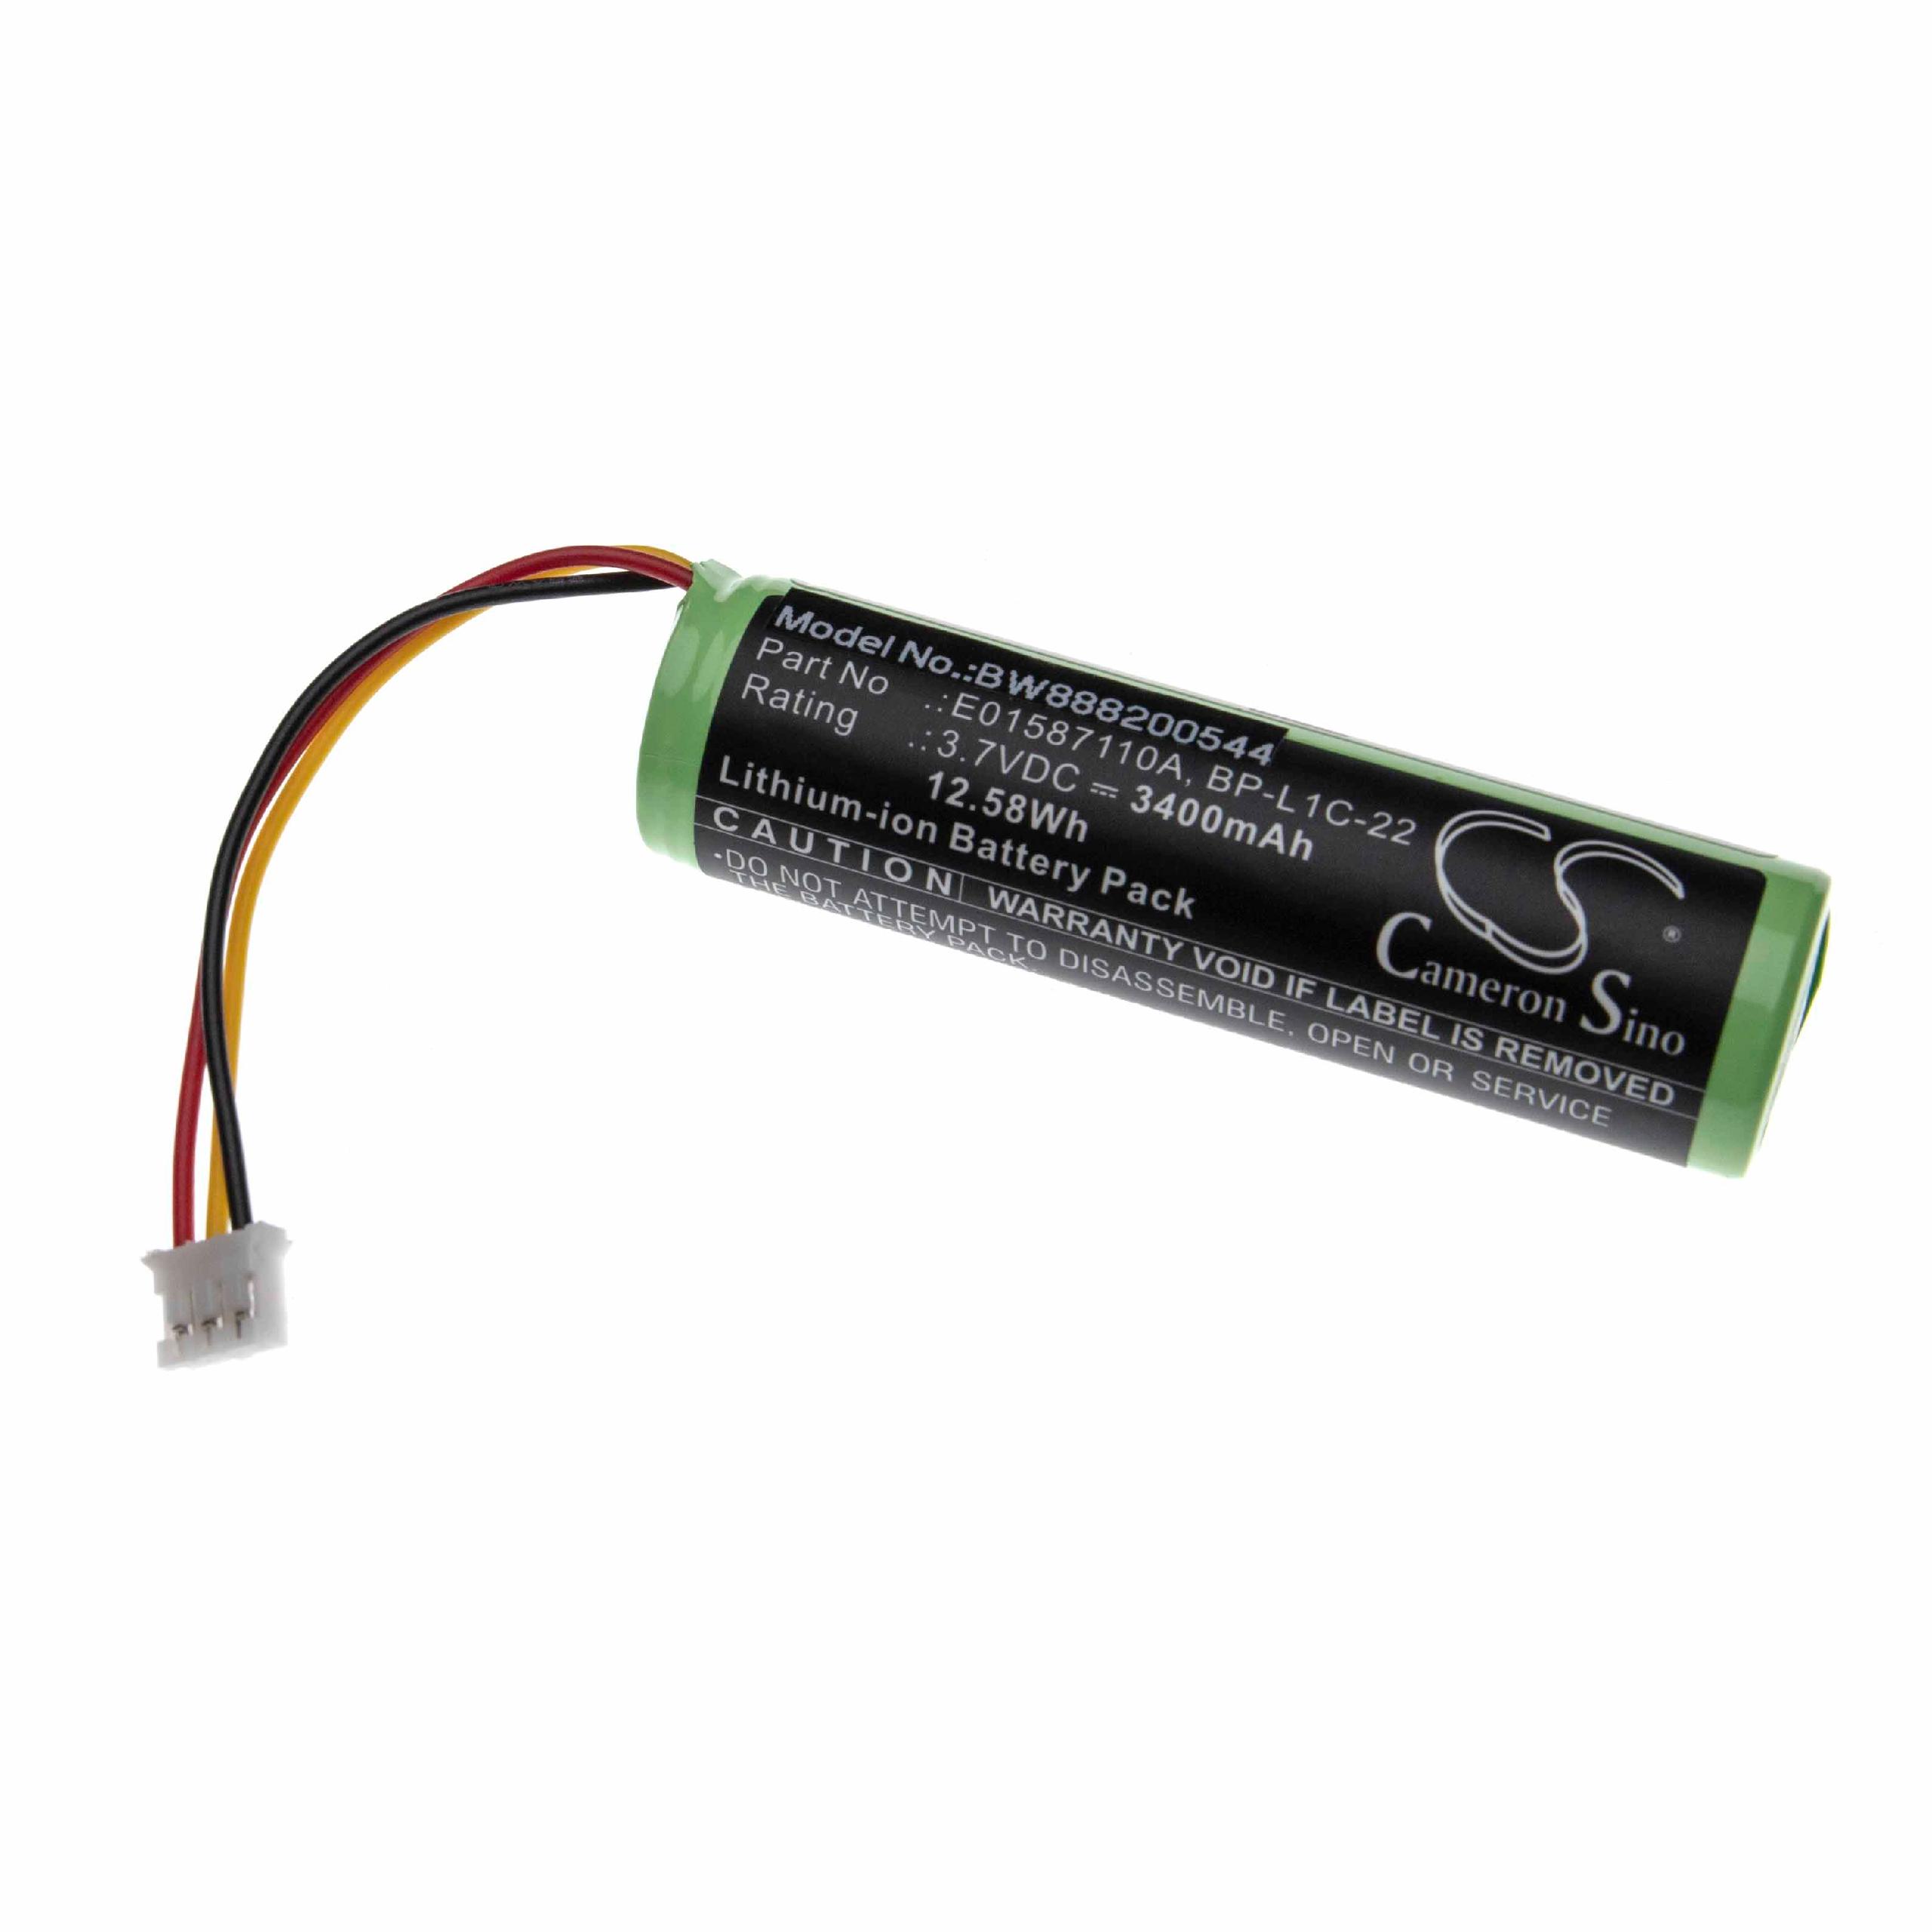 Batería reemplaza Tascam E01587110A, BP-L1C-22 para reproductor MP3 Tascam - 3400 mAh 3,7 V Li-Ion